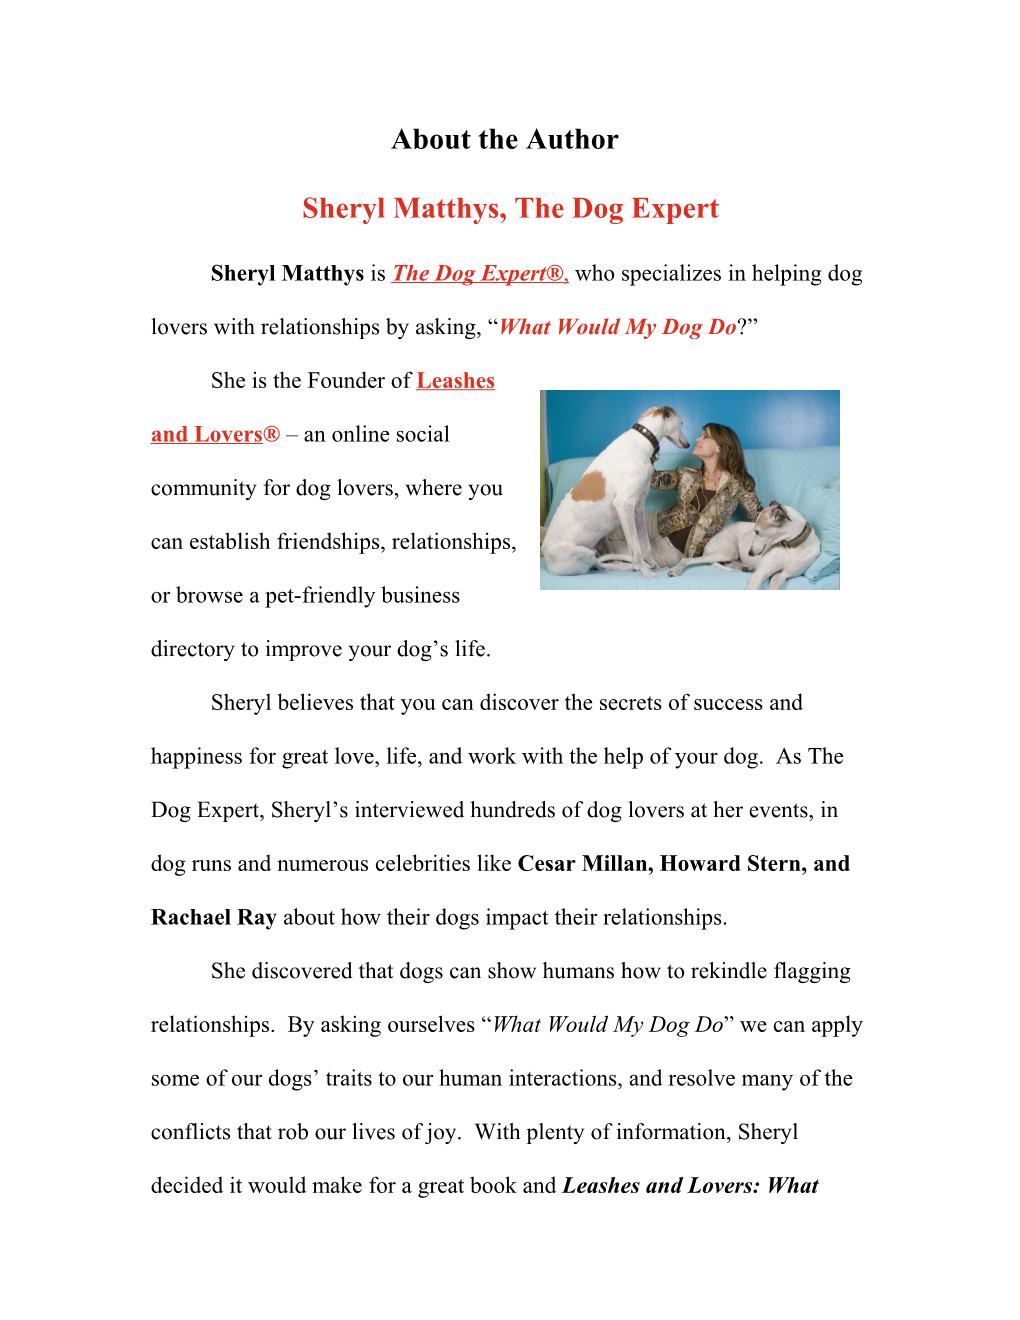 Sheryl Matthys, the Dog Expert